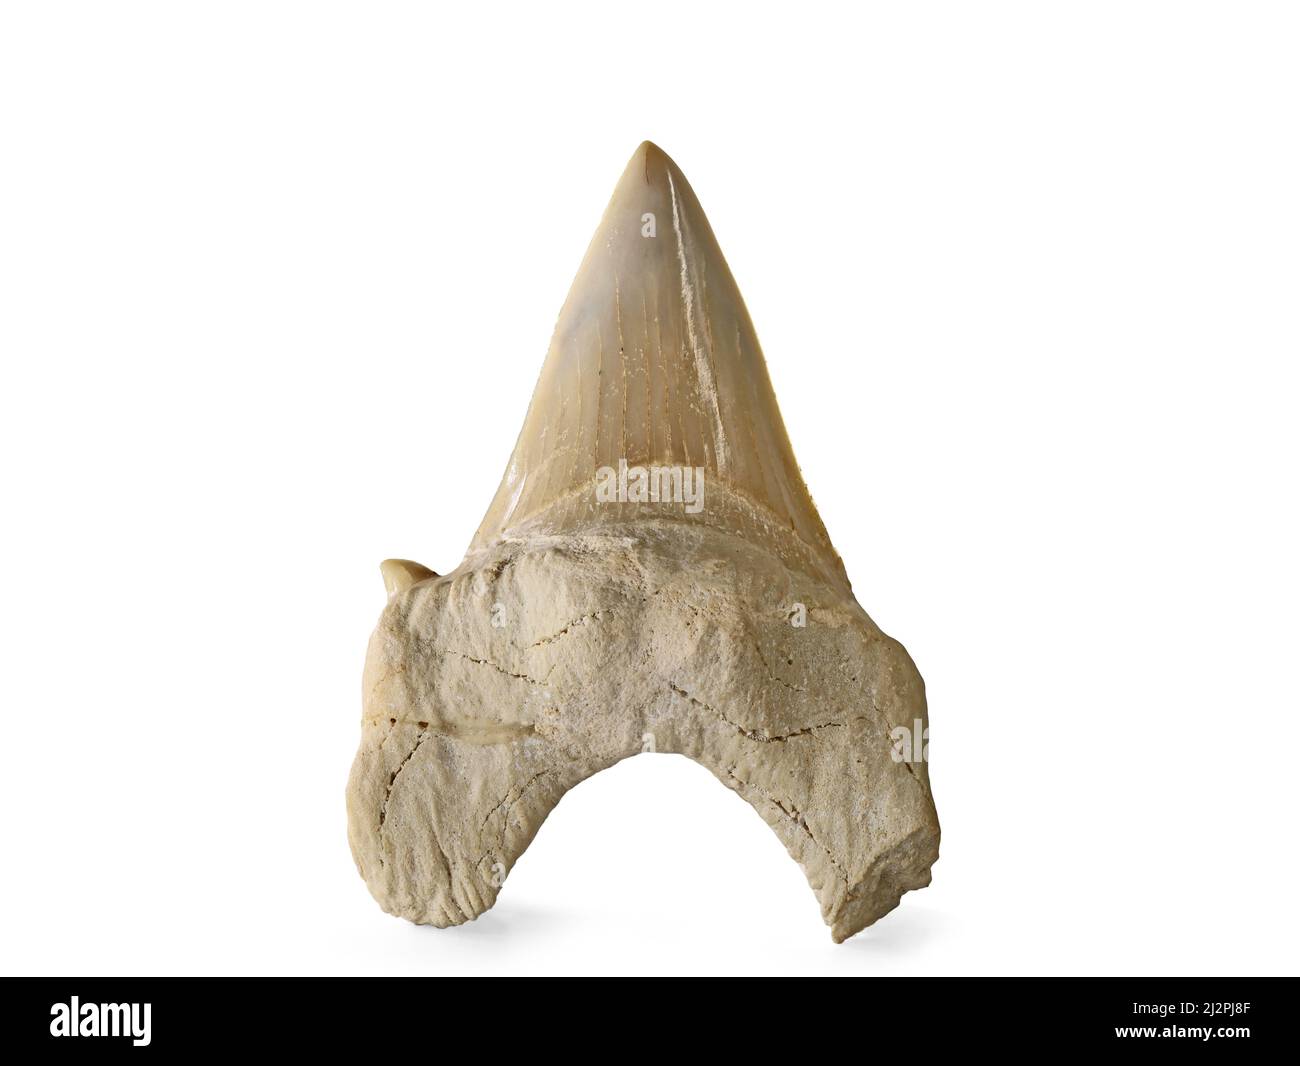 How to use Maxima Shark Tooth 